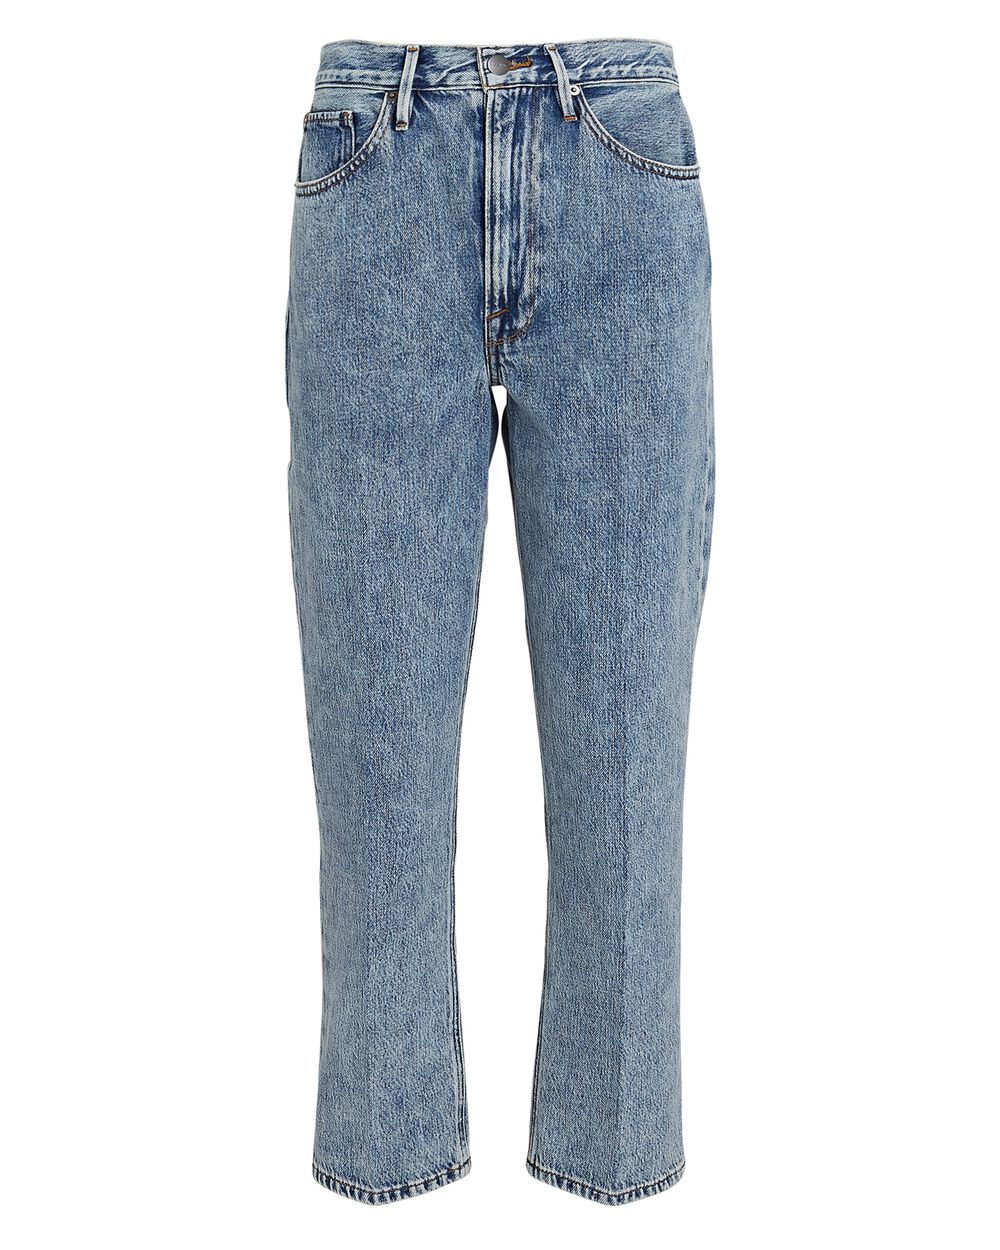 Women's 207 Vintage Jeans, High-Rise Wide-Leg